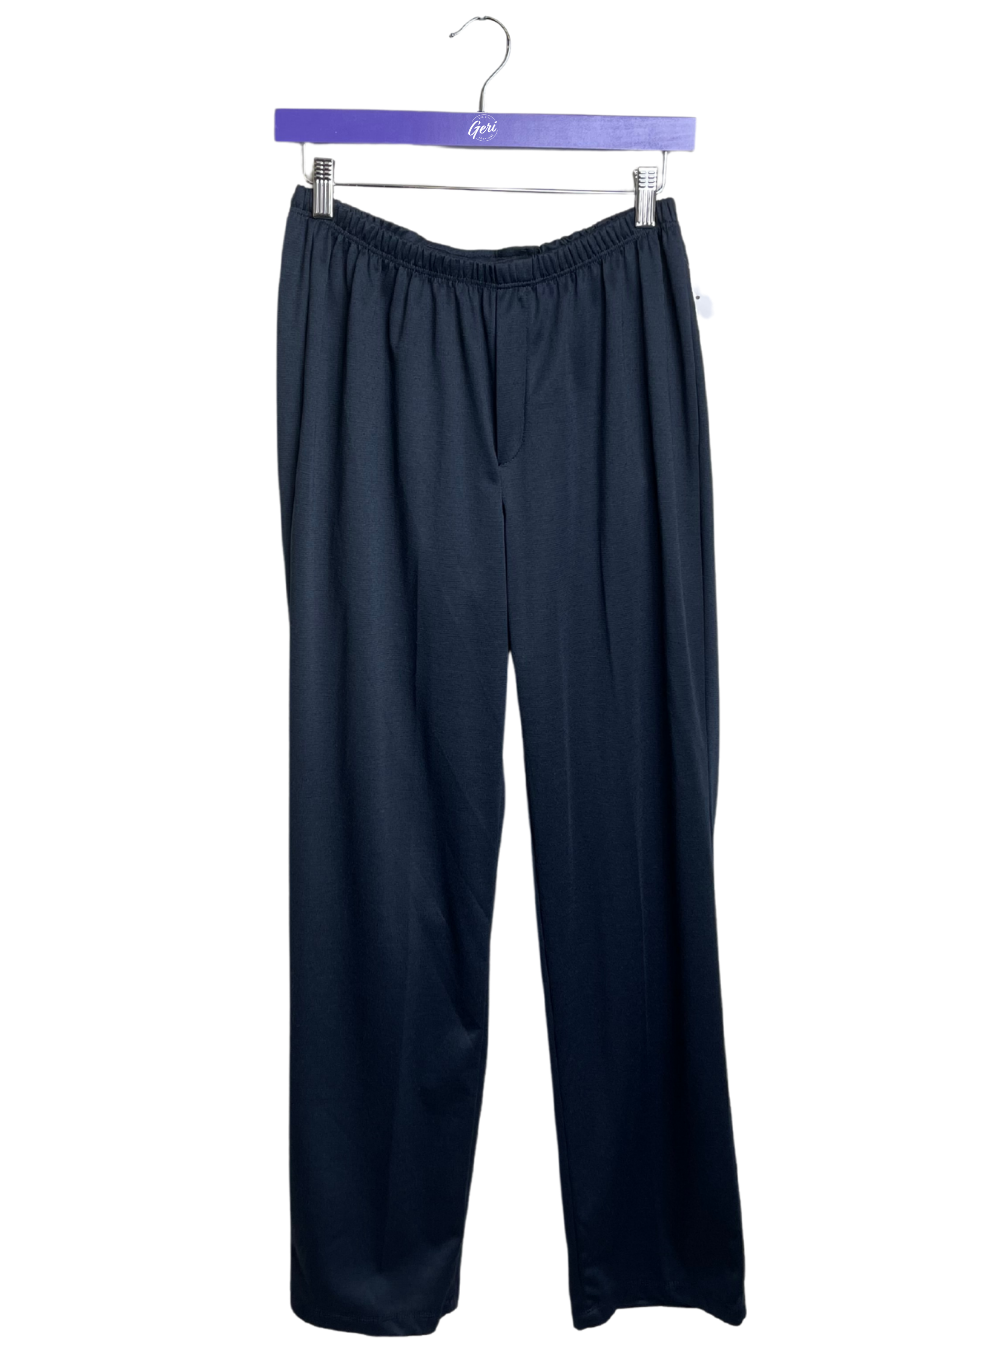 Men's Light Weight Knit Pants Adaptive Clothing for Seniors